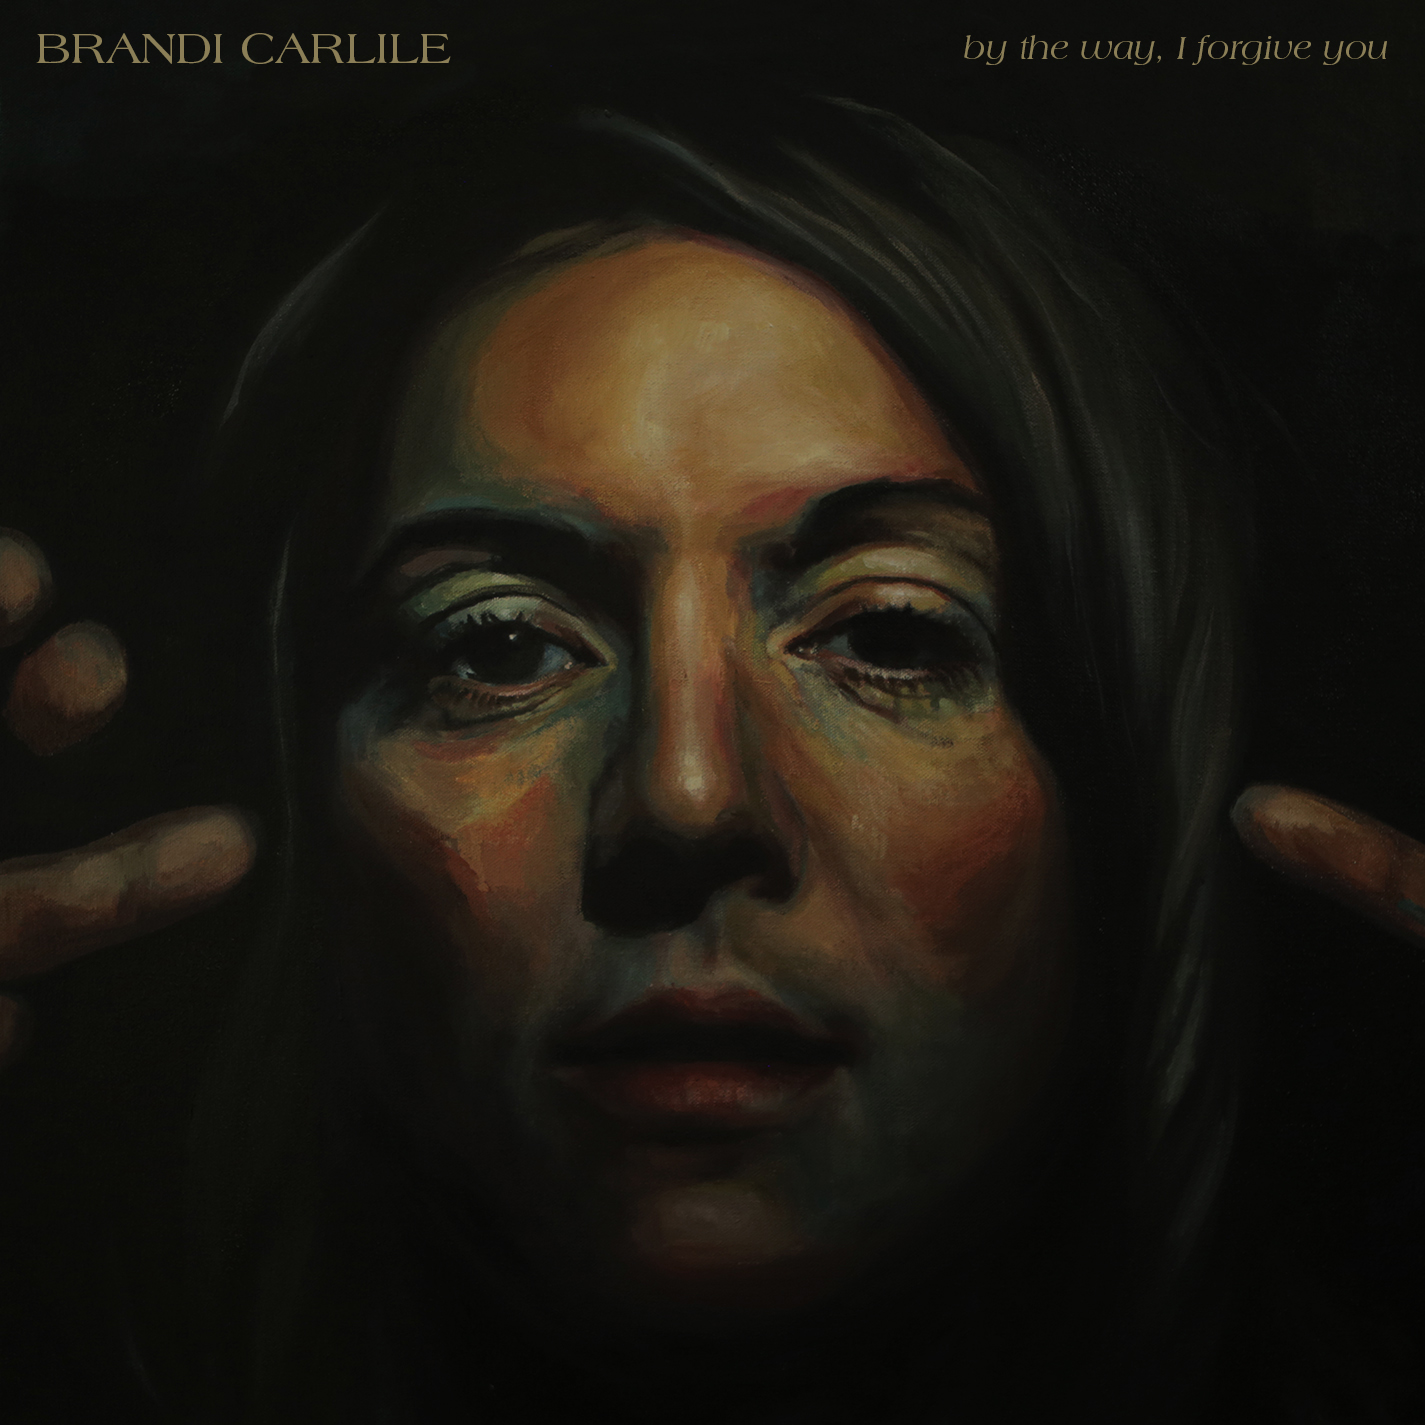 Brandi Carlile album cover art painting by Scott Avett. Photo provided.